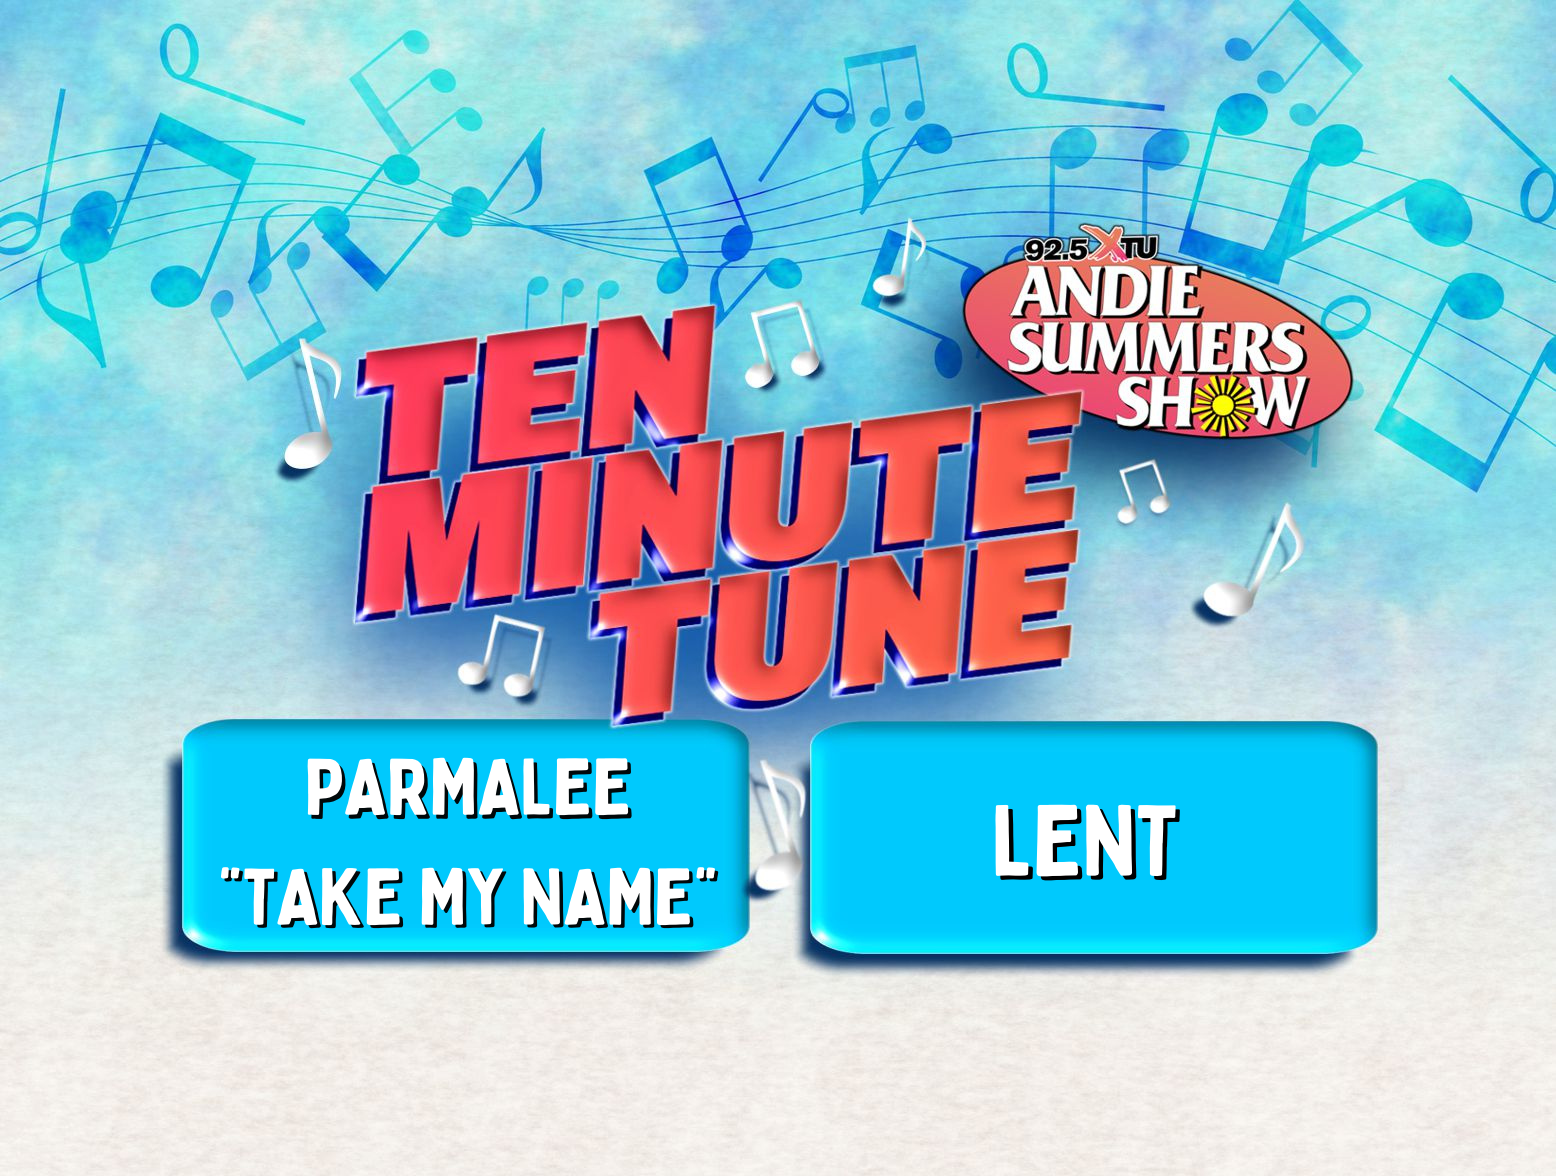 Ten Minute Tune: Take My Name & Lent